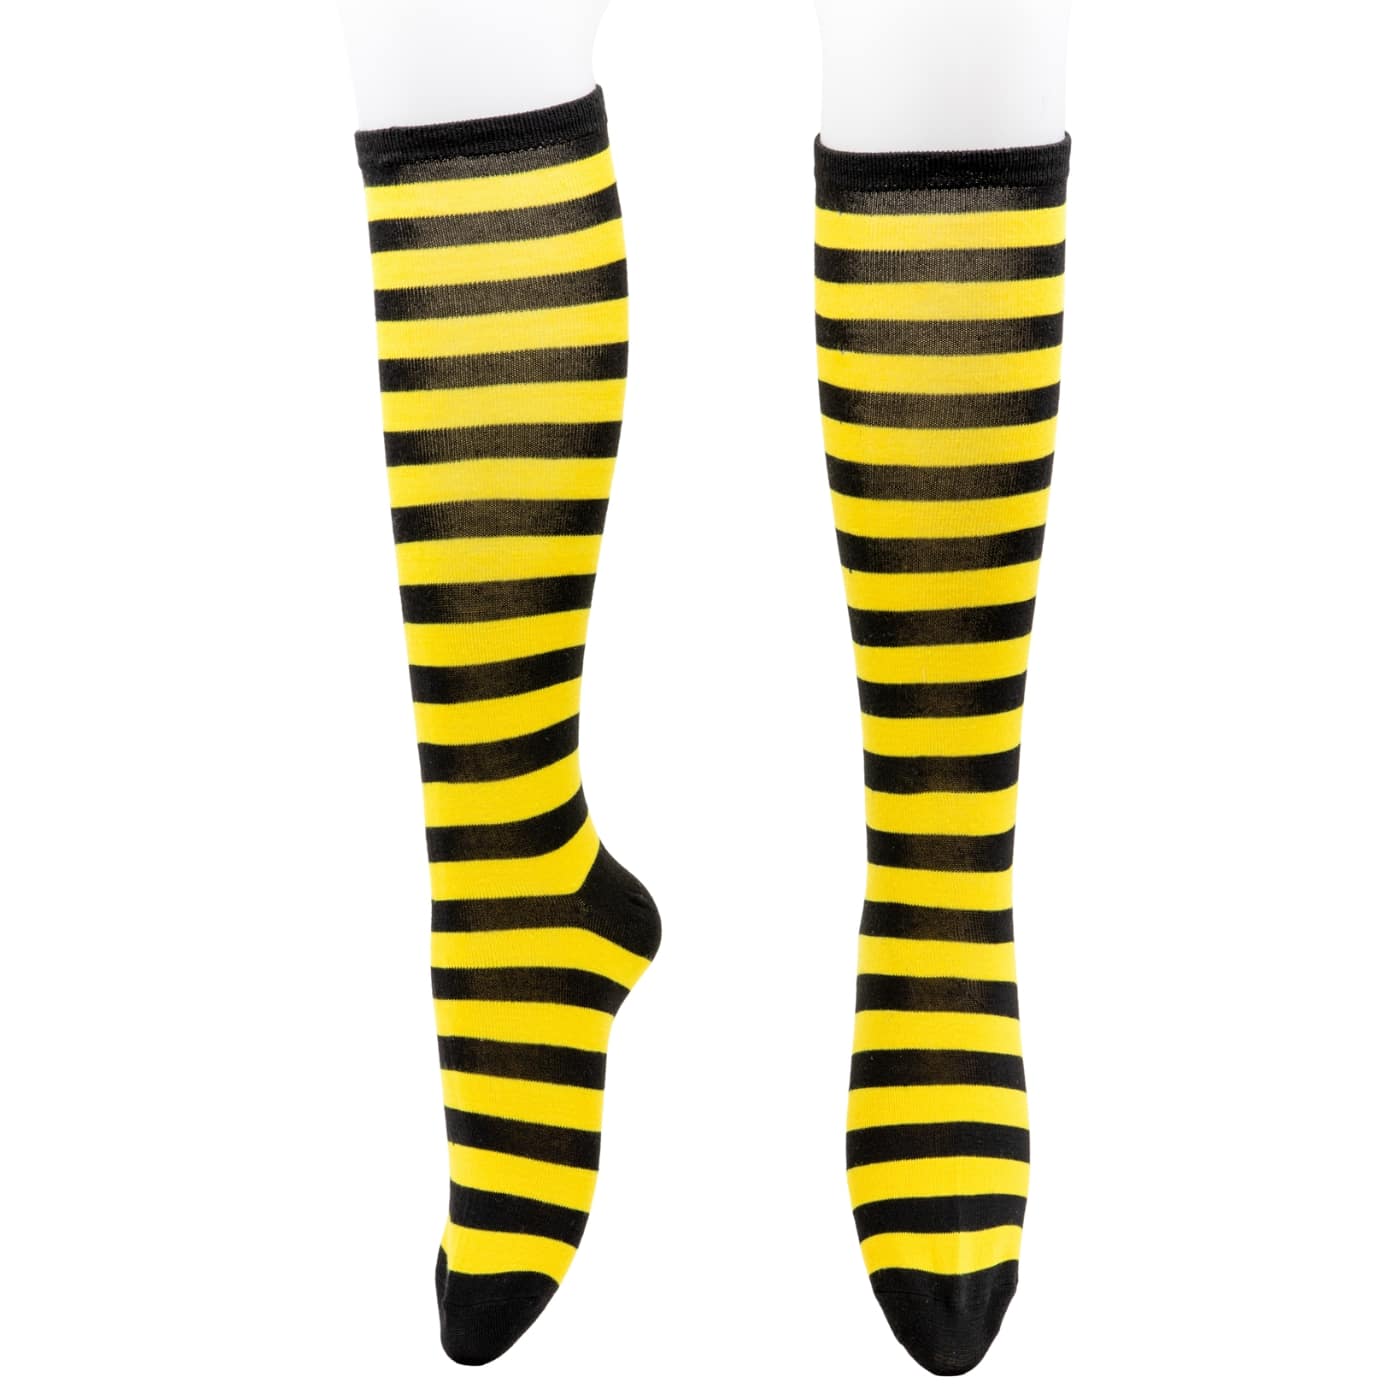 Black & Yellow Stripe Knee High Socks by RainbowsAndFairies.com.au (Stripe Long Socks - Rainbow - Stockings - Colourful Socks - Vintage Inspired) - SKU: FW_SOCKS_STRIPE_B&Y - Pic-01